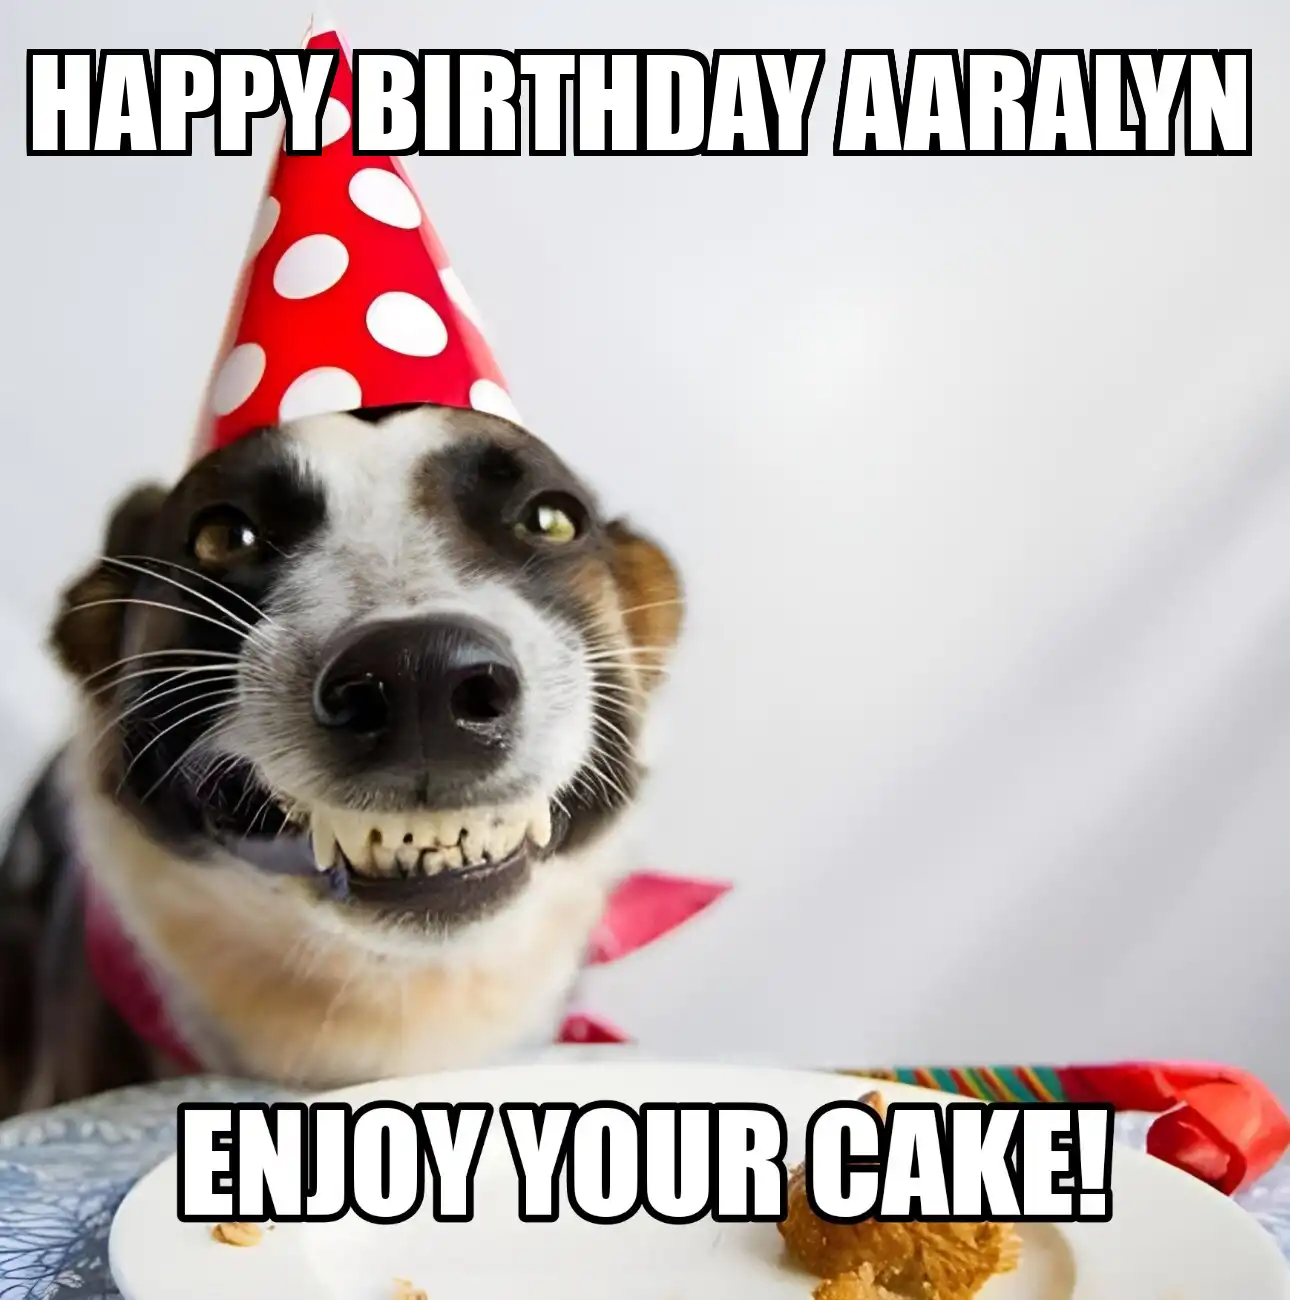 Happy Birthday Aaralyn Enjoy Your Cake Dog Meme